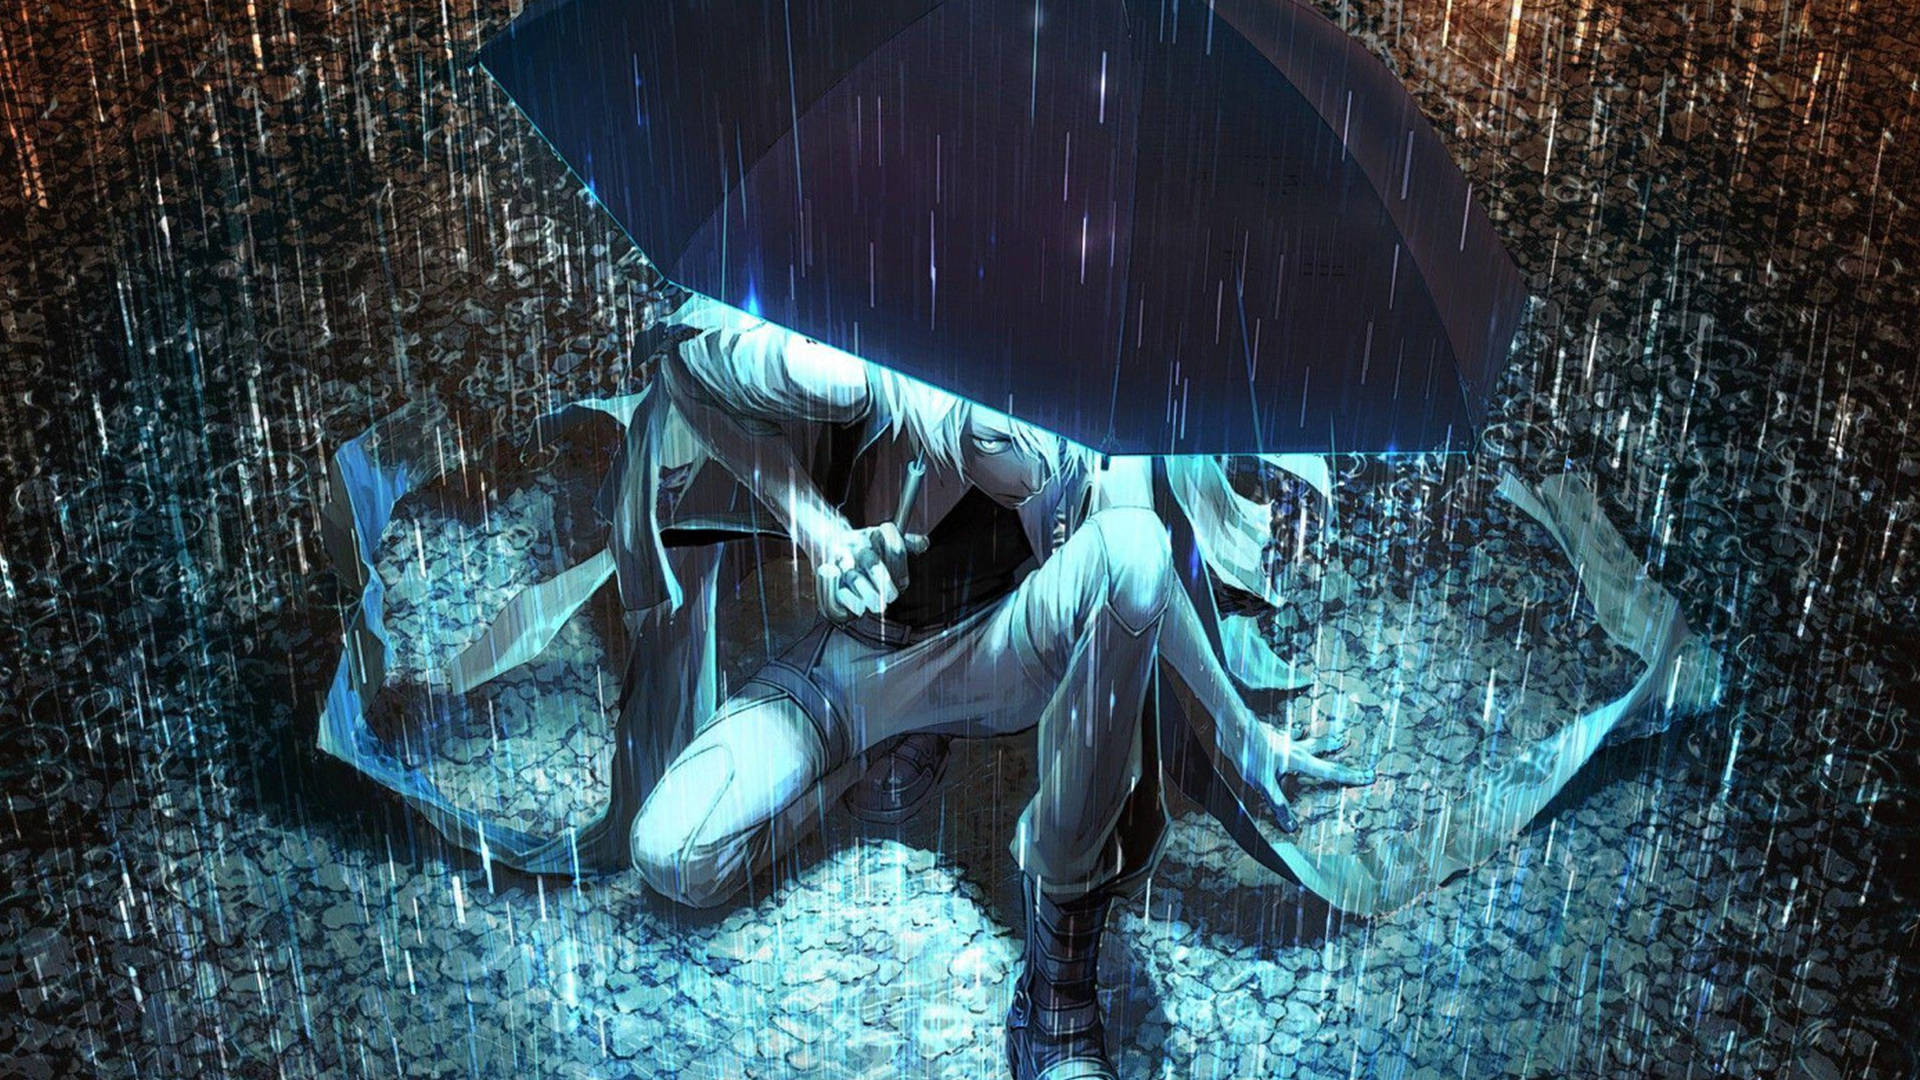 Sad Anime 4k On The Ground With Umbrella Background